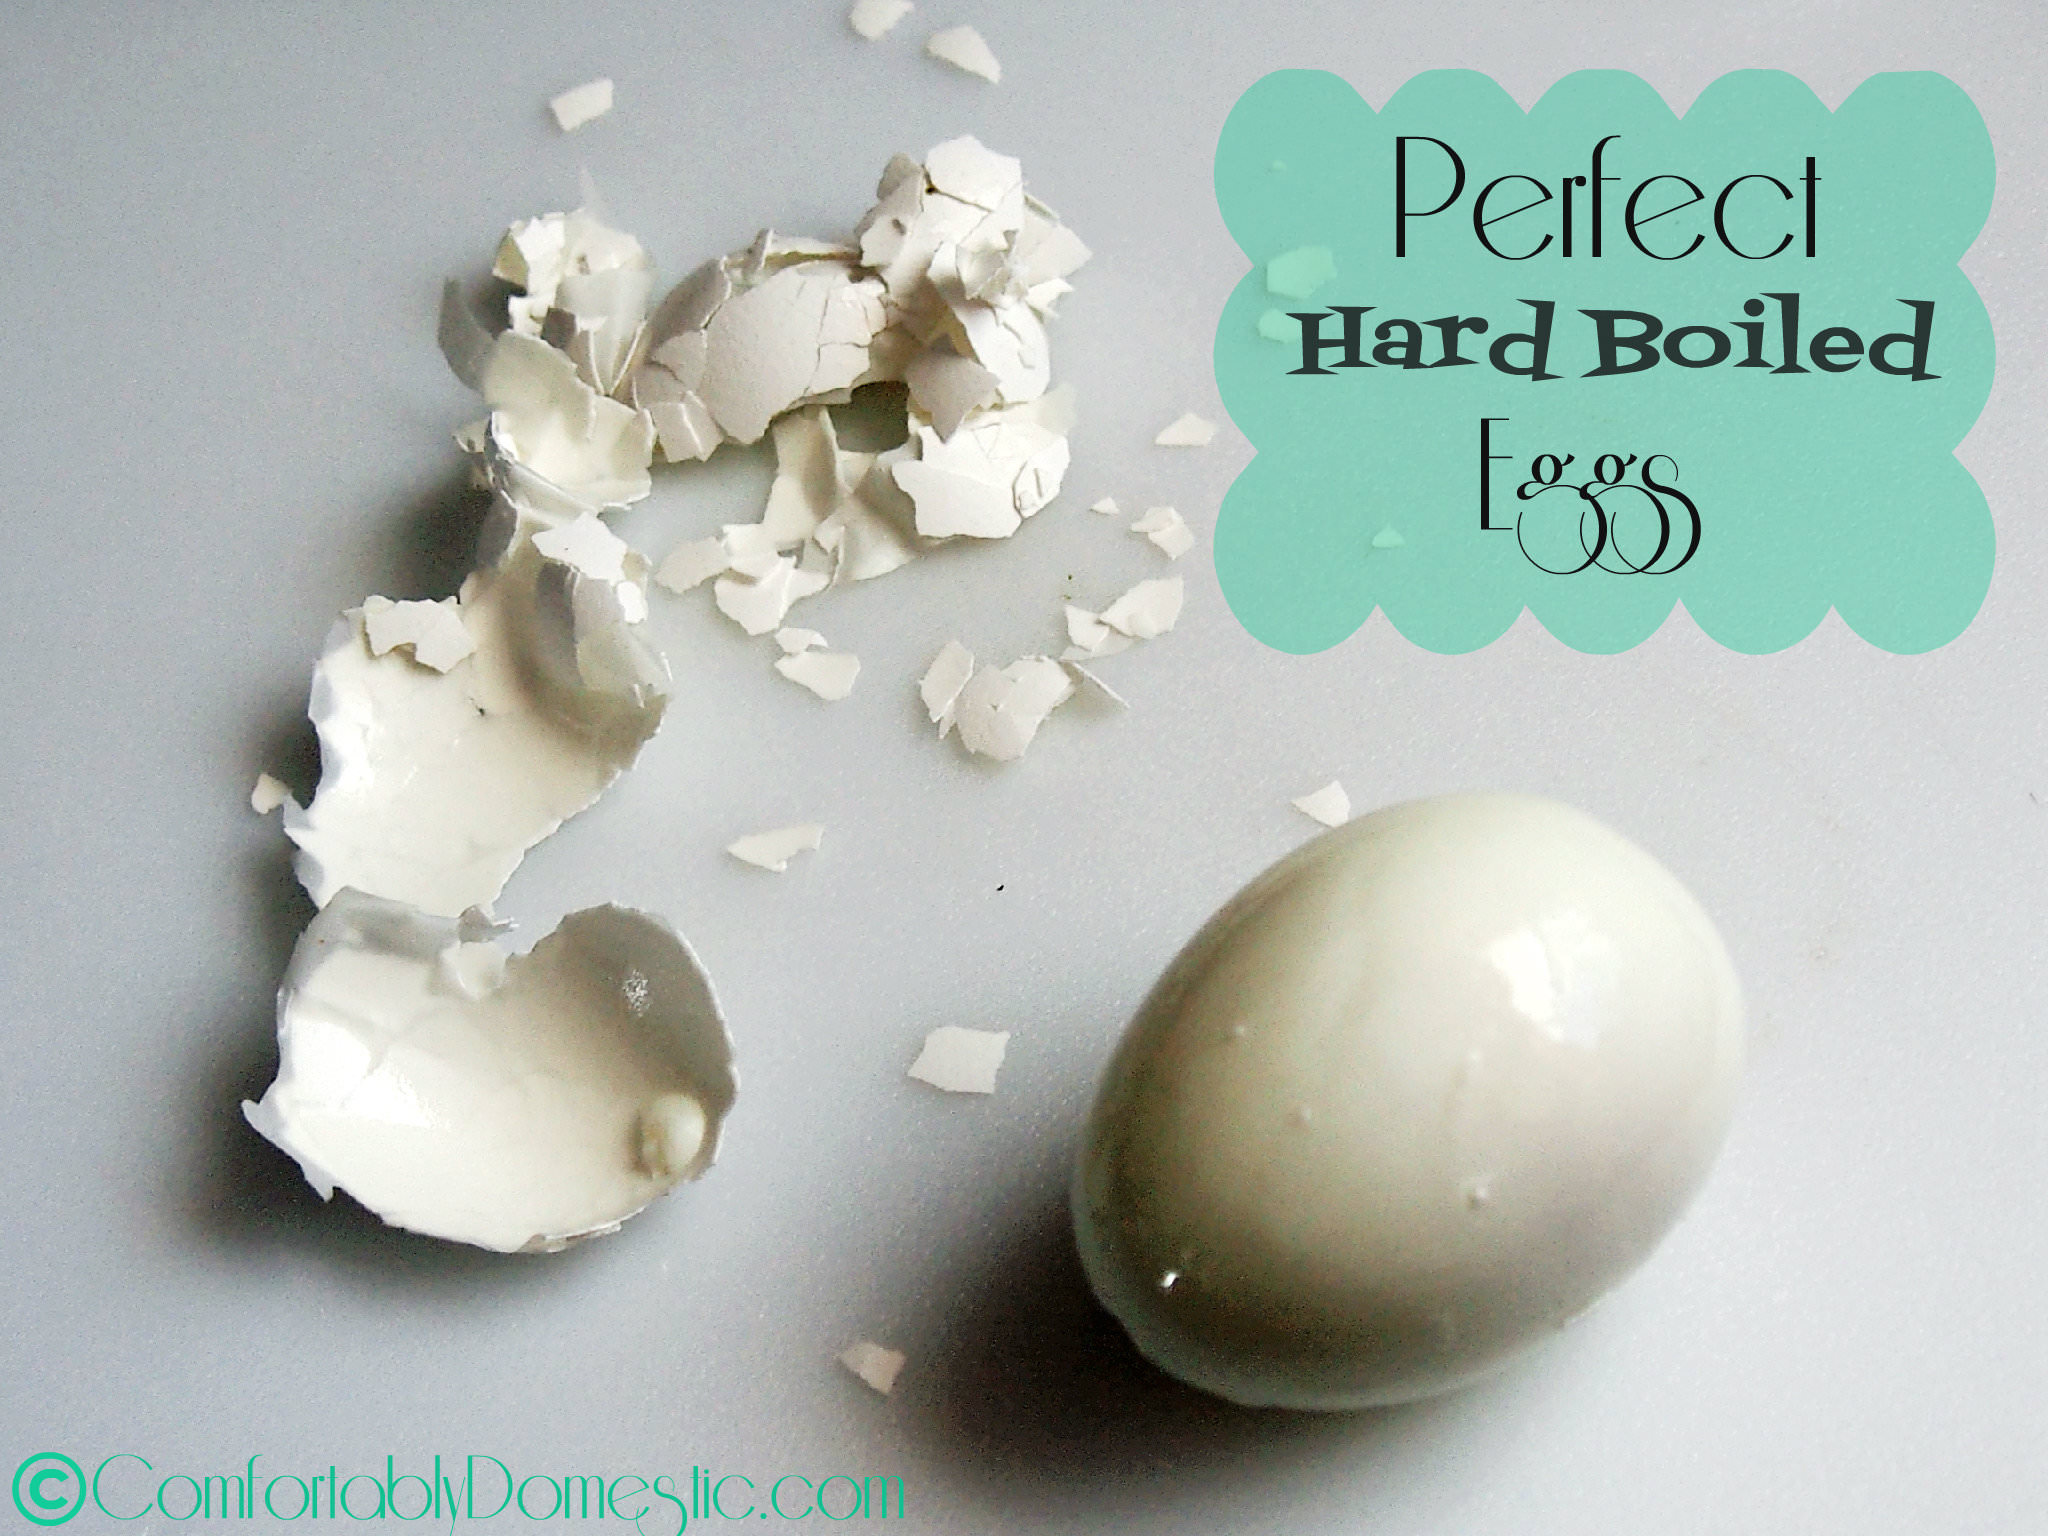 Perfect Hard Boiled Eggs via ComfortablyDomestic.com